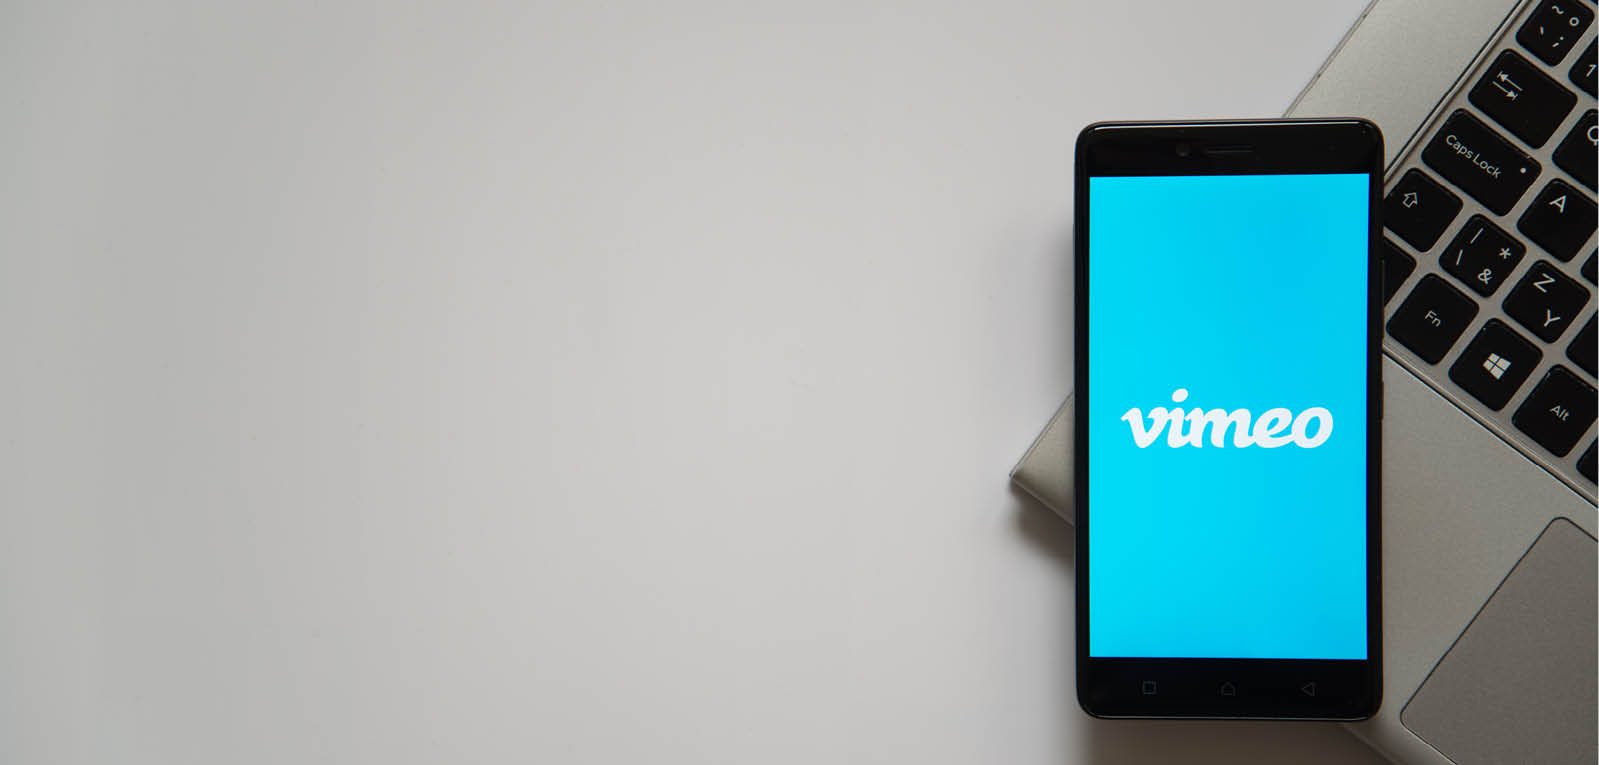 Vimeo app open on a phone